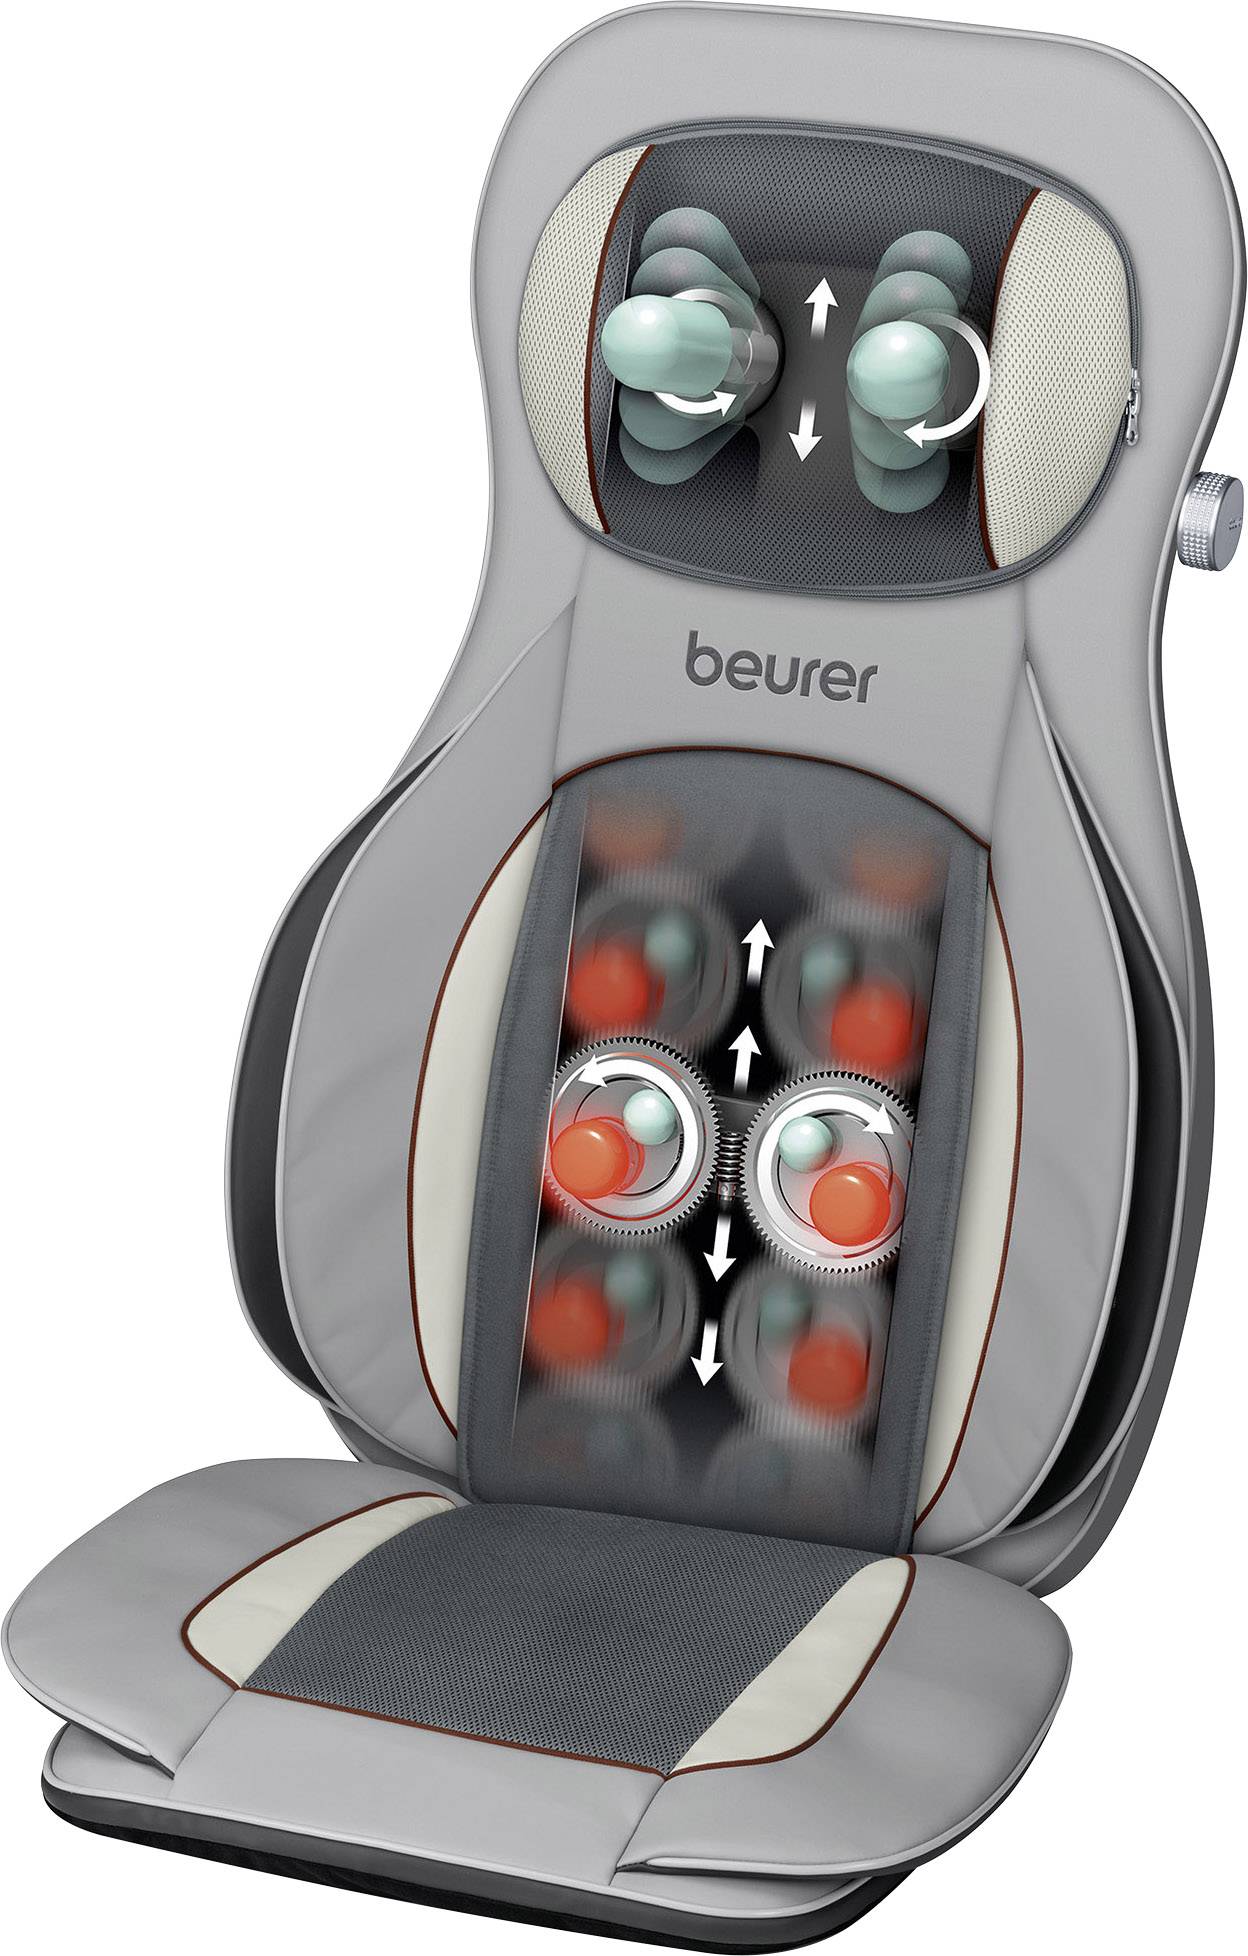 Vet verdund Oraal Beurer MG 320 Massage cushion 35 W Anthracite | Conrad.com